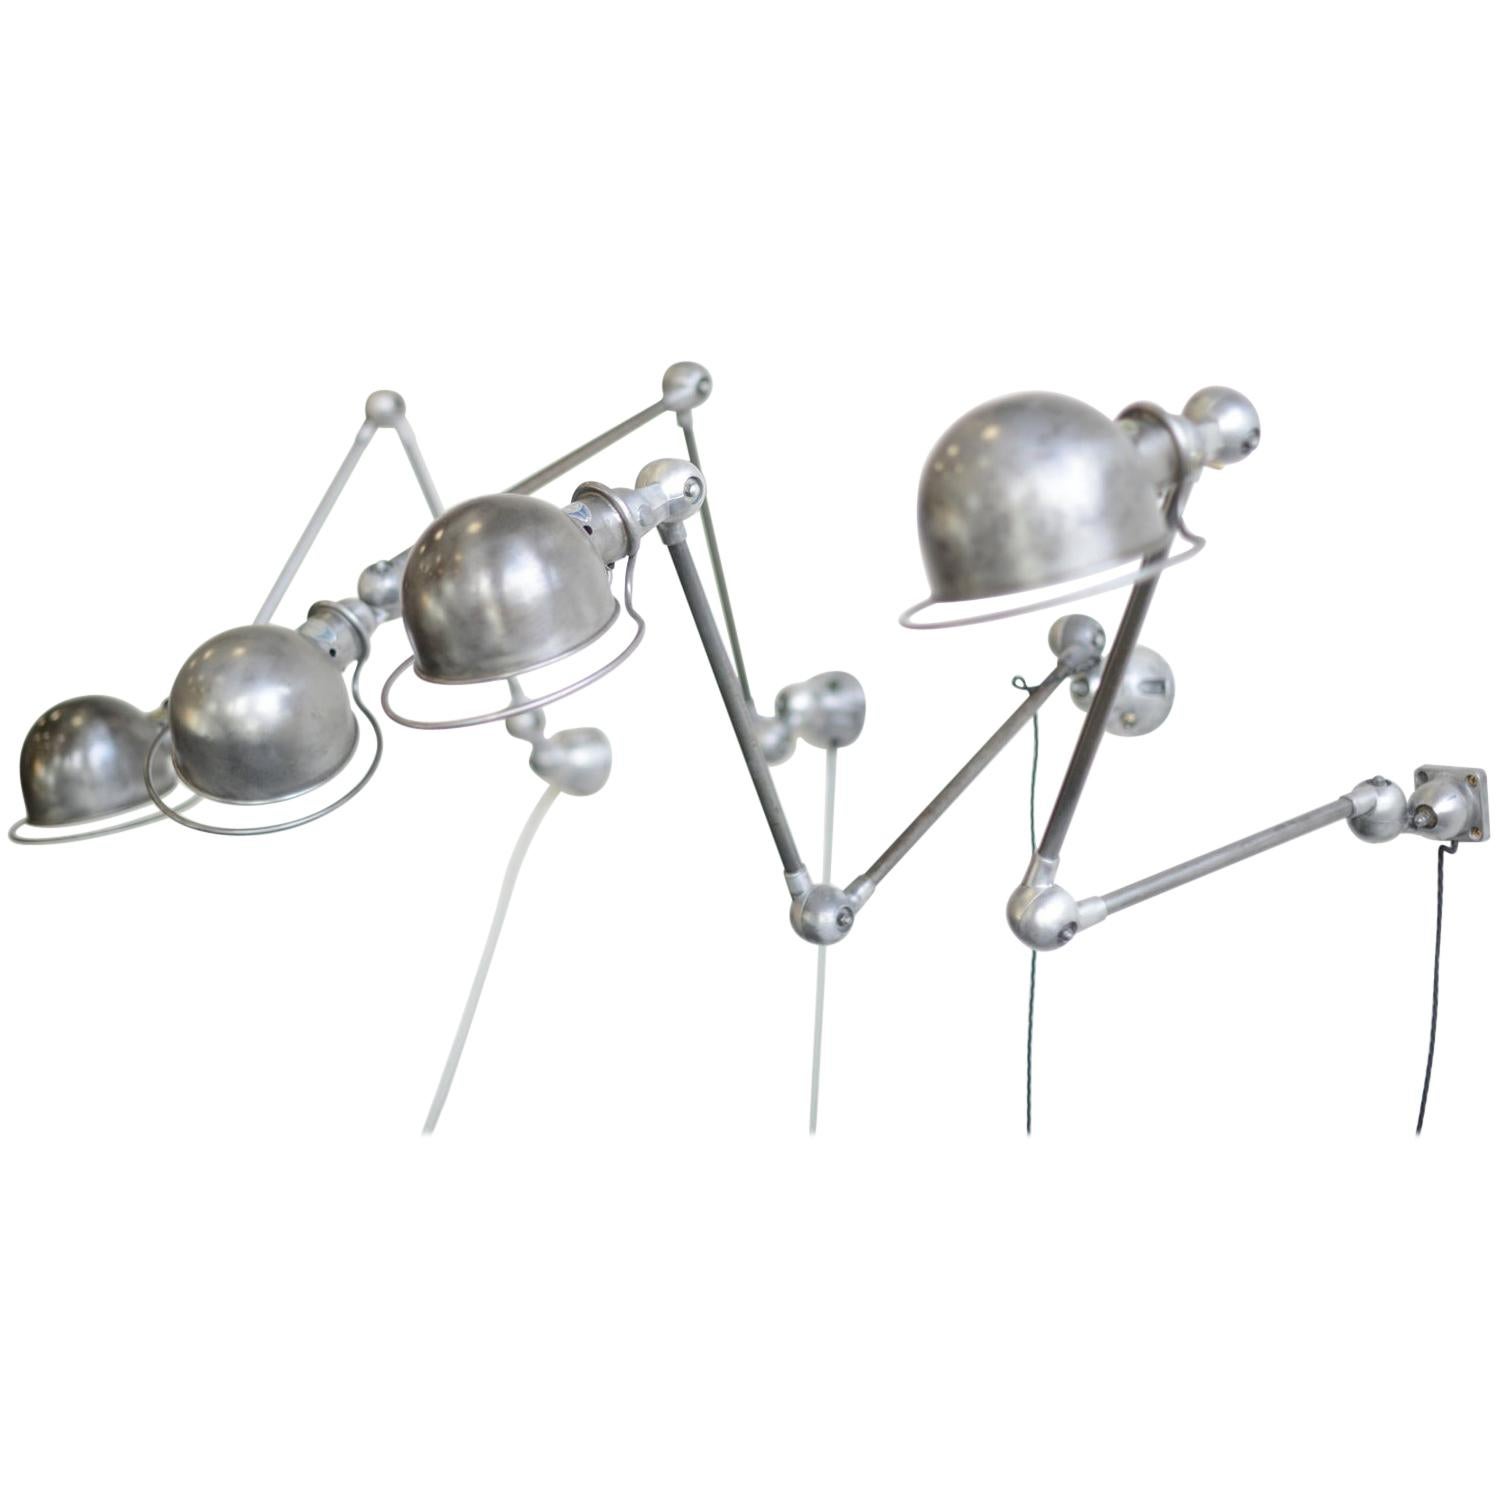 Industrial Task Lamps by Jielde, circa 1950s